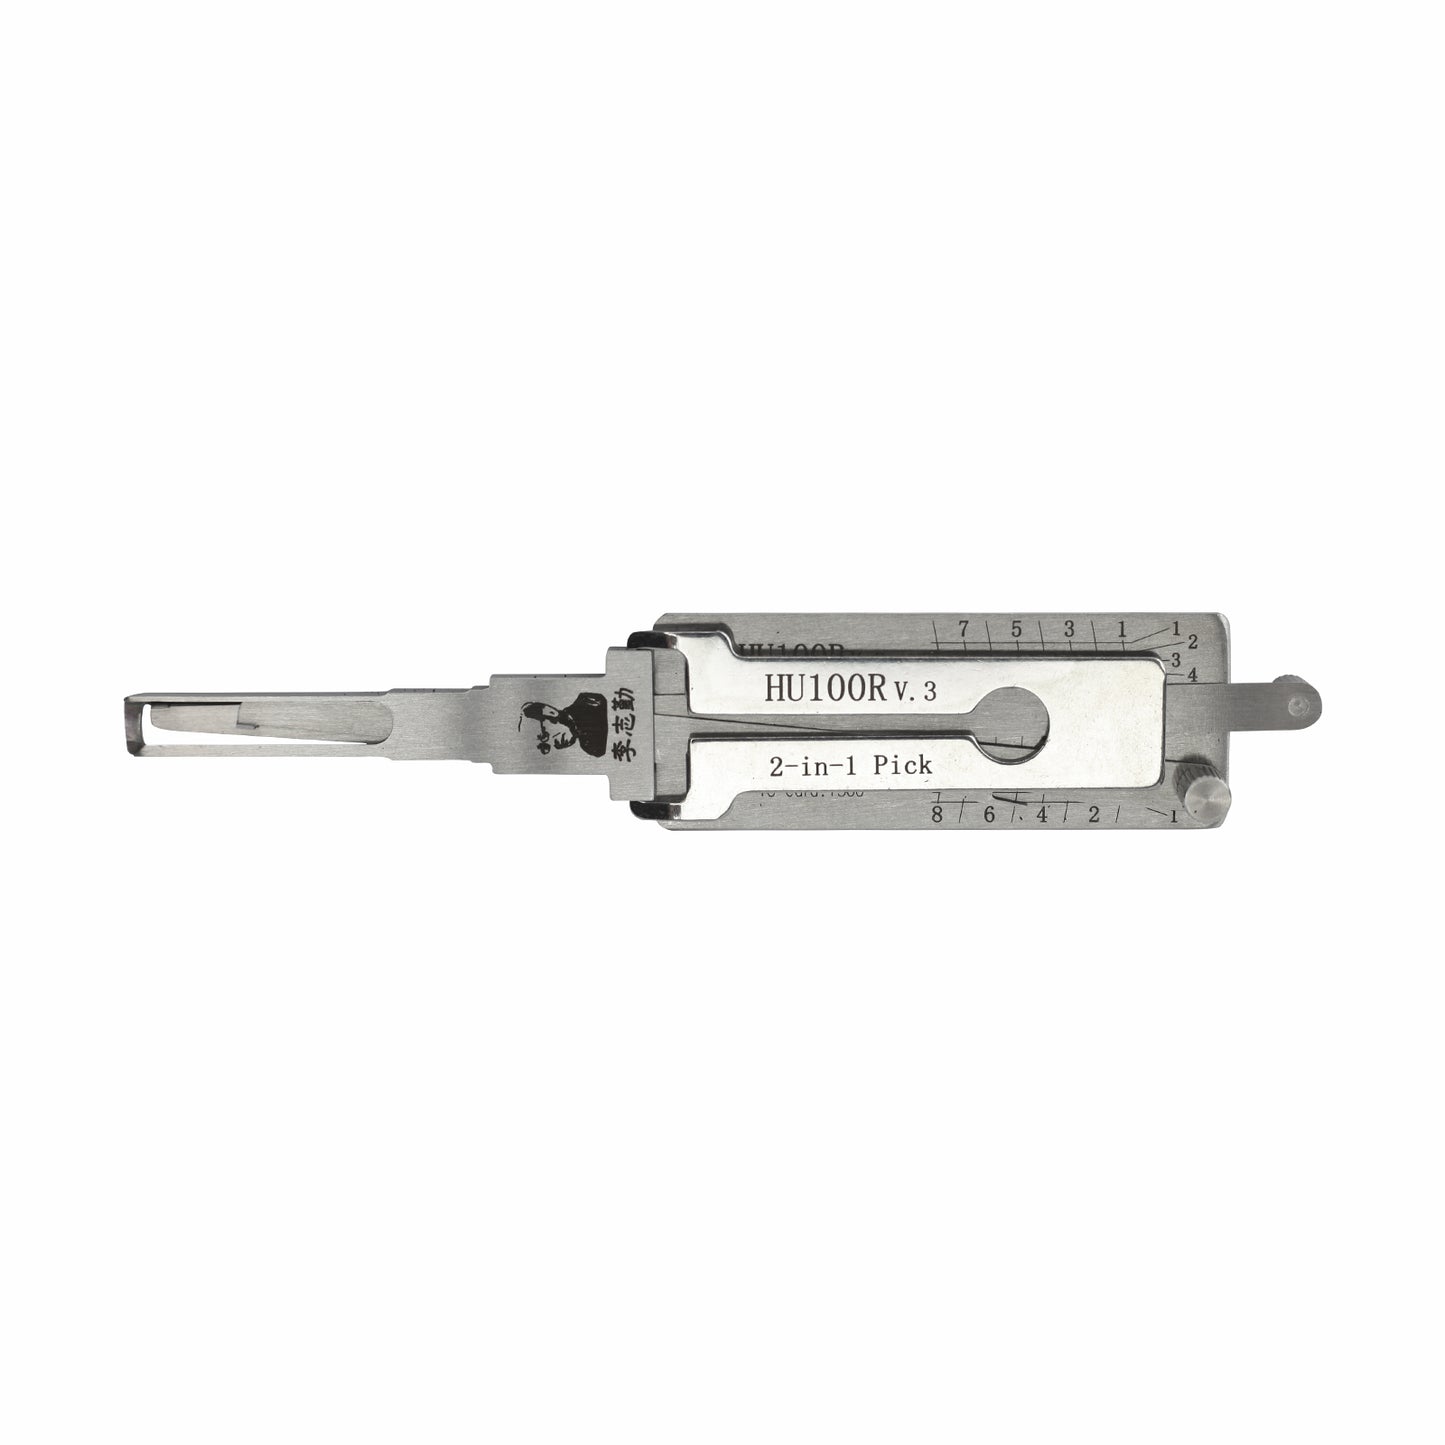 Original Auto Locksmith Tools door lishi 2-in-1Unlock ToolHigh Quality HU100R V.3 Ign